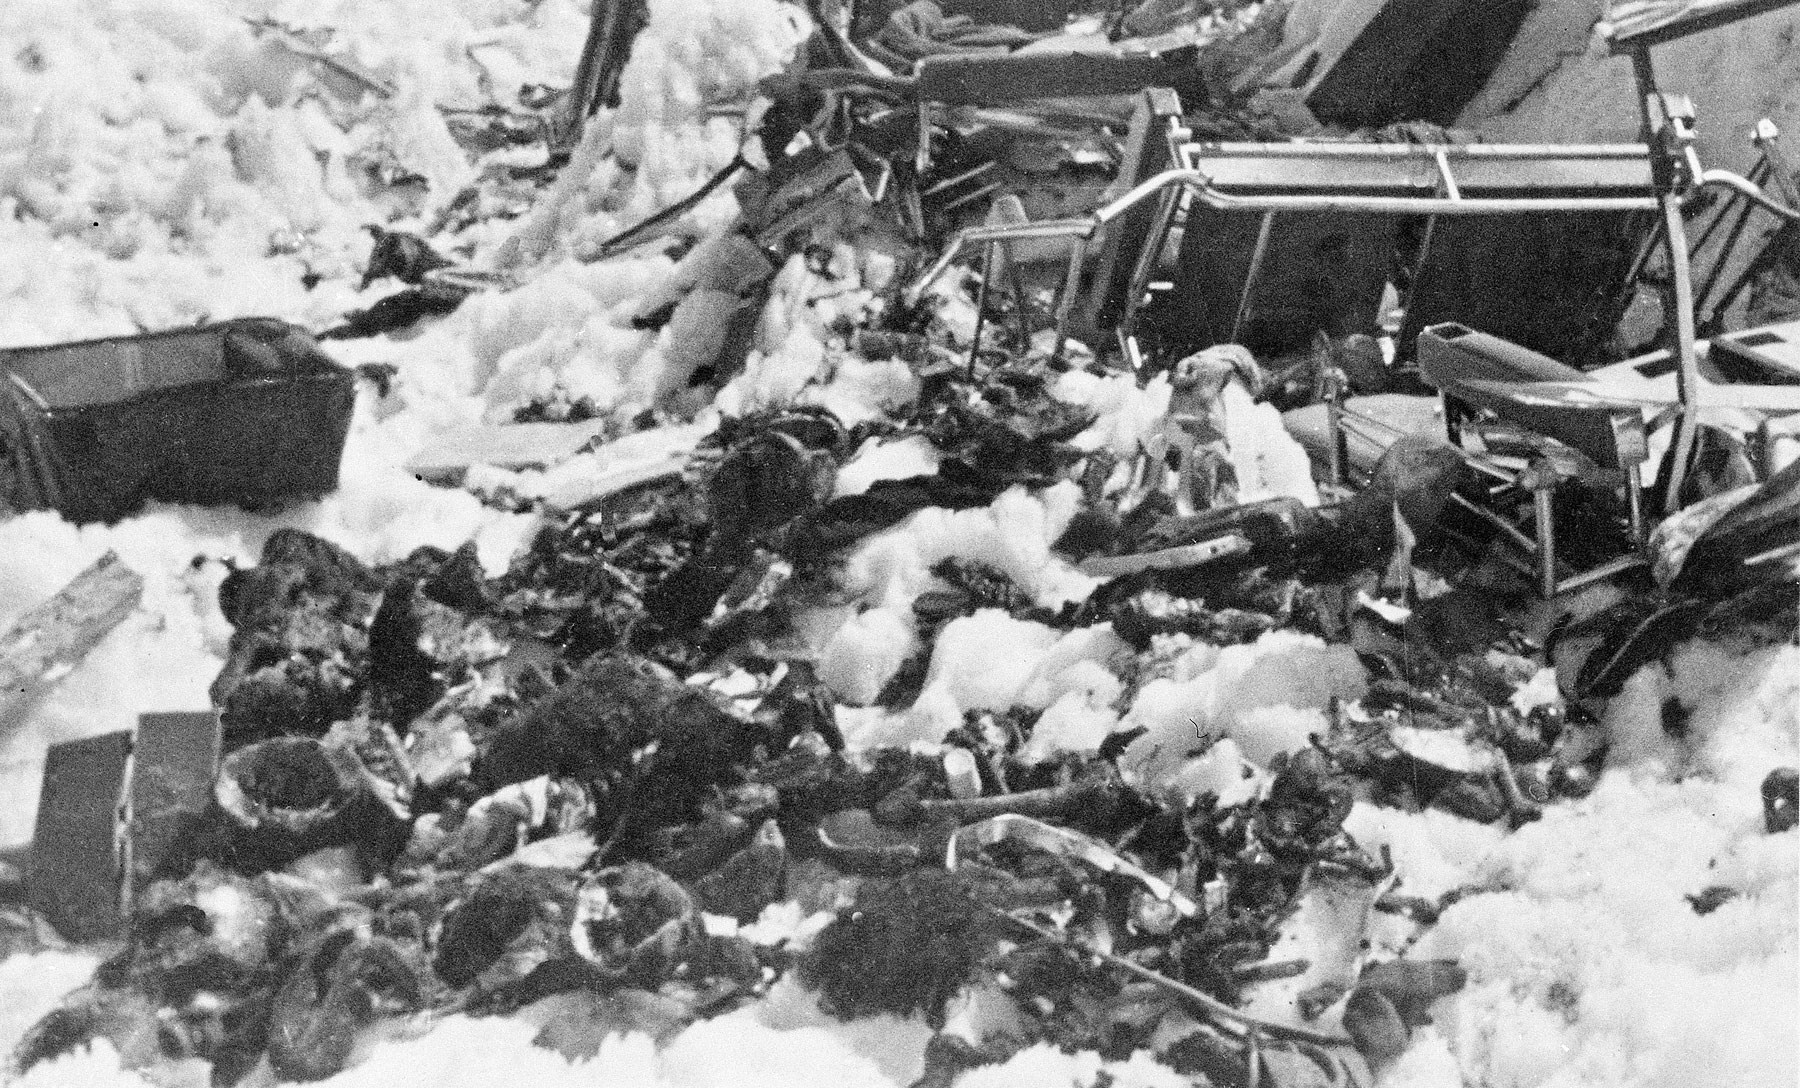 Part of the wreckage of Uruguayan Air Force Flight 571, seen Dec. 23, 1972. (AP)